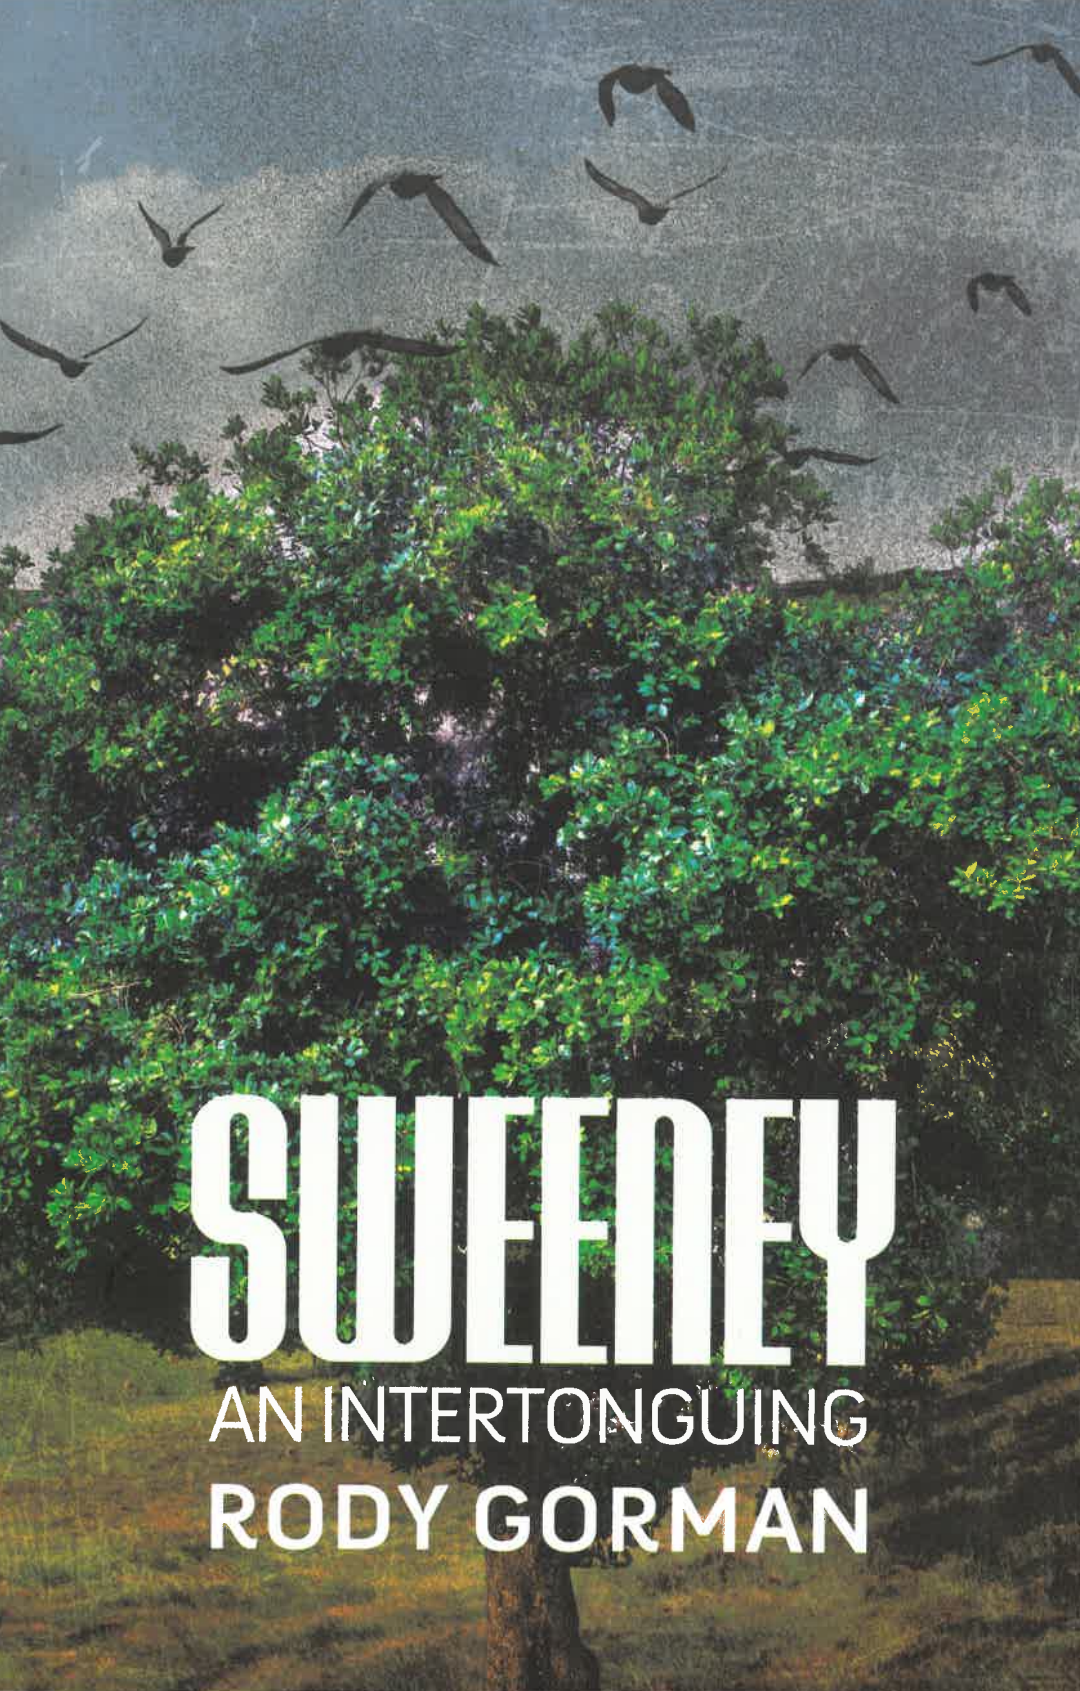 Sweeney – An Intertonguing by Rody Gorman